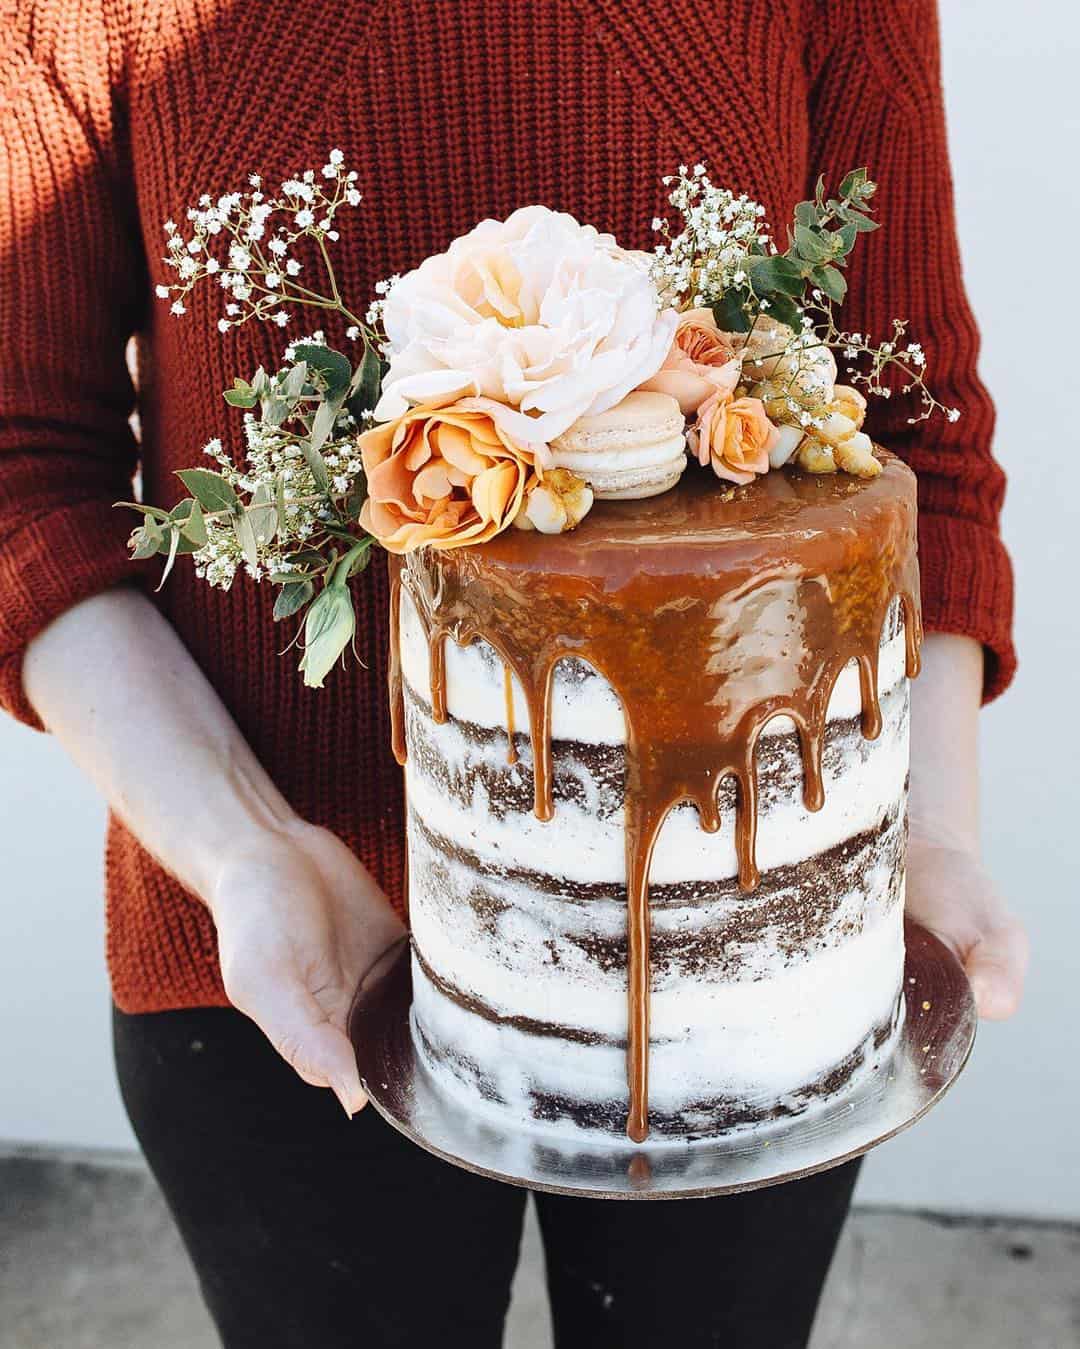 caramel drip layer cake by Sunshine Coast bakery Tome